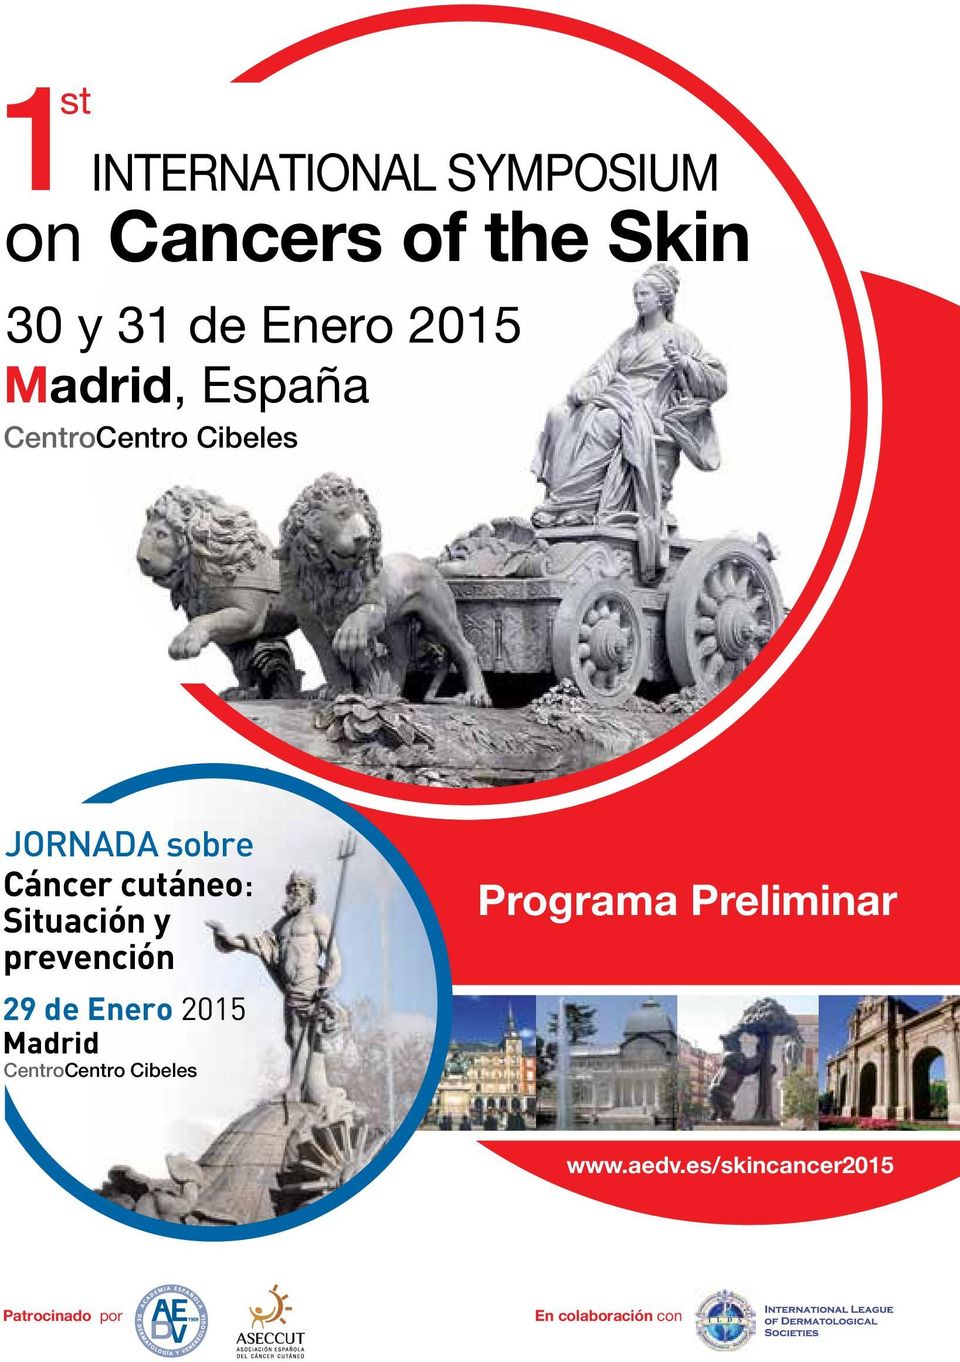 Enero 2015 Madrid Programa Preliminar www.aedv.